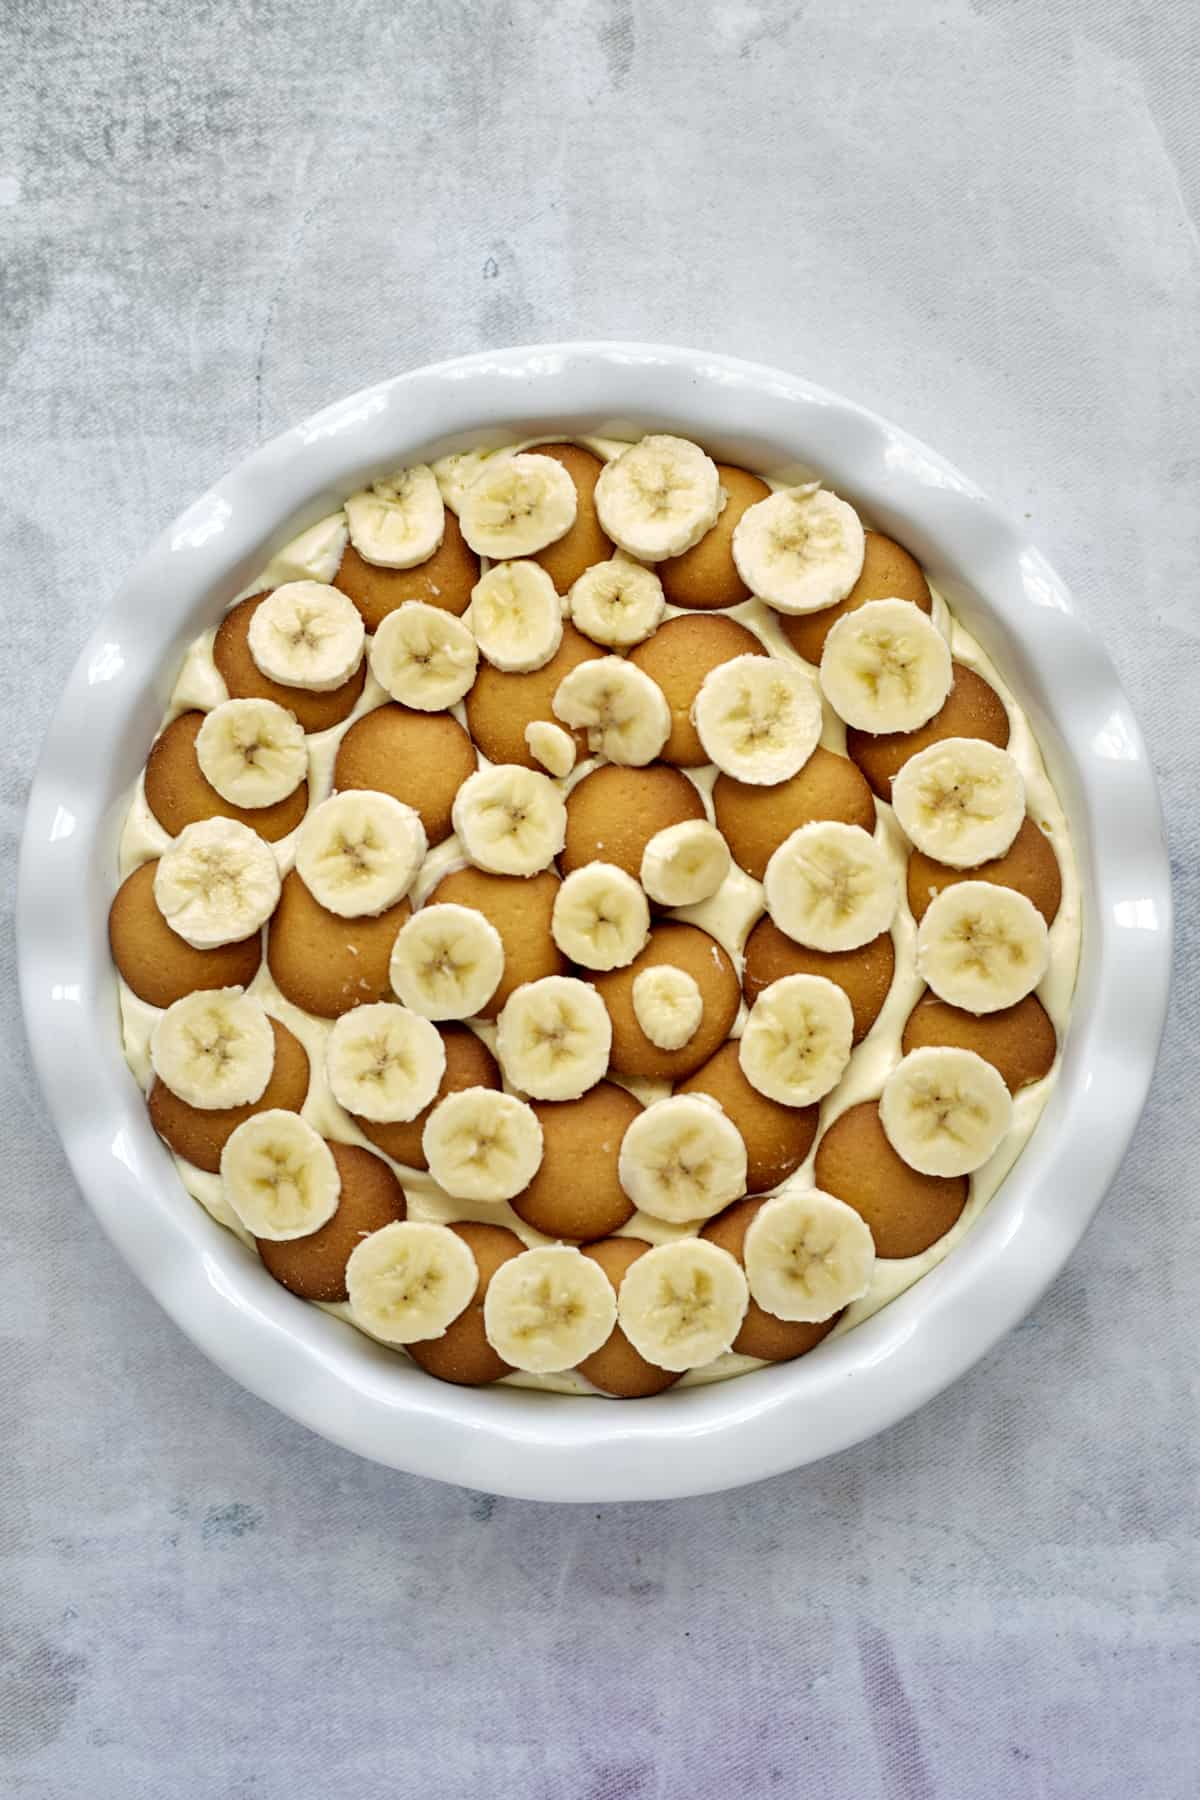 Nilla wafers and banana coins over vanilla pudding for banana pudding